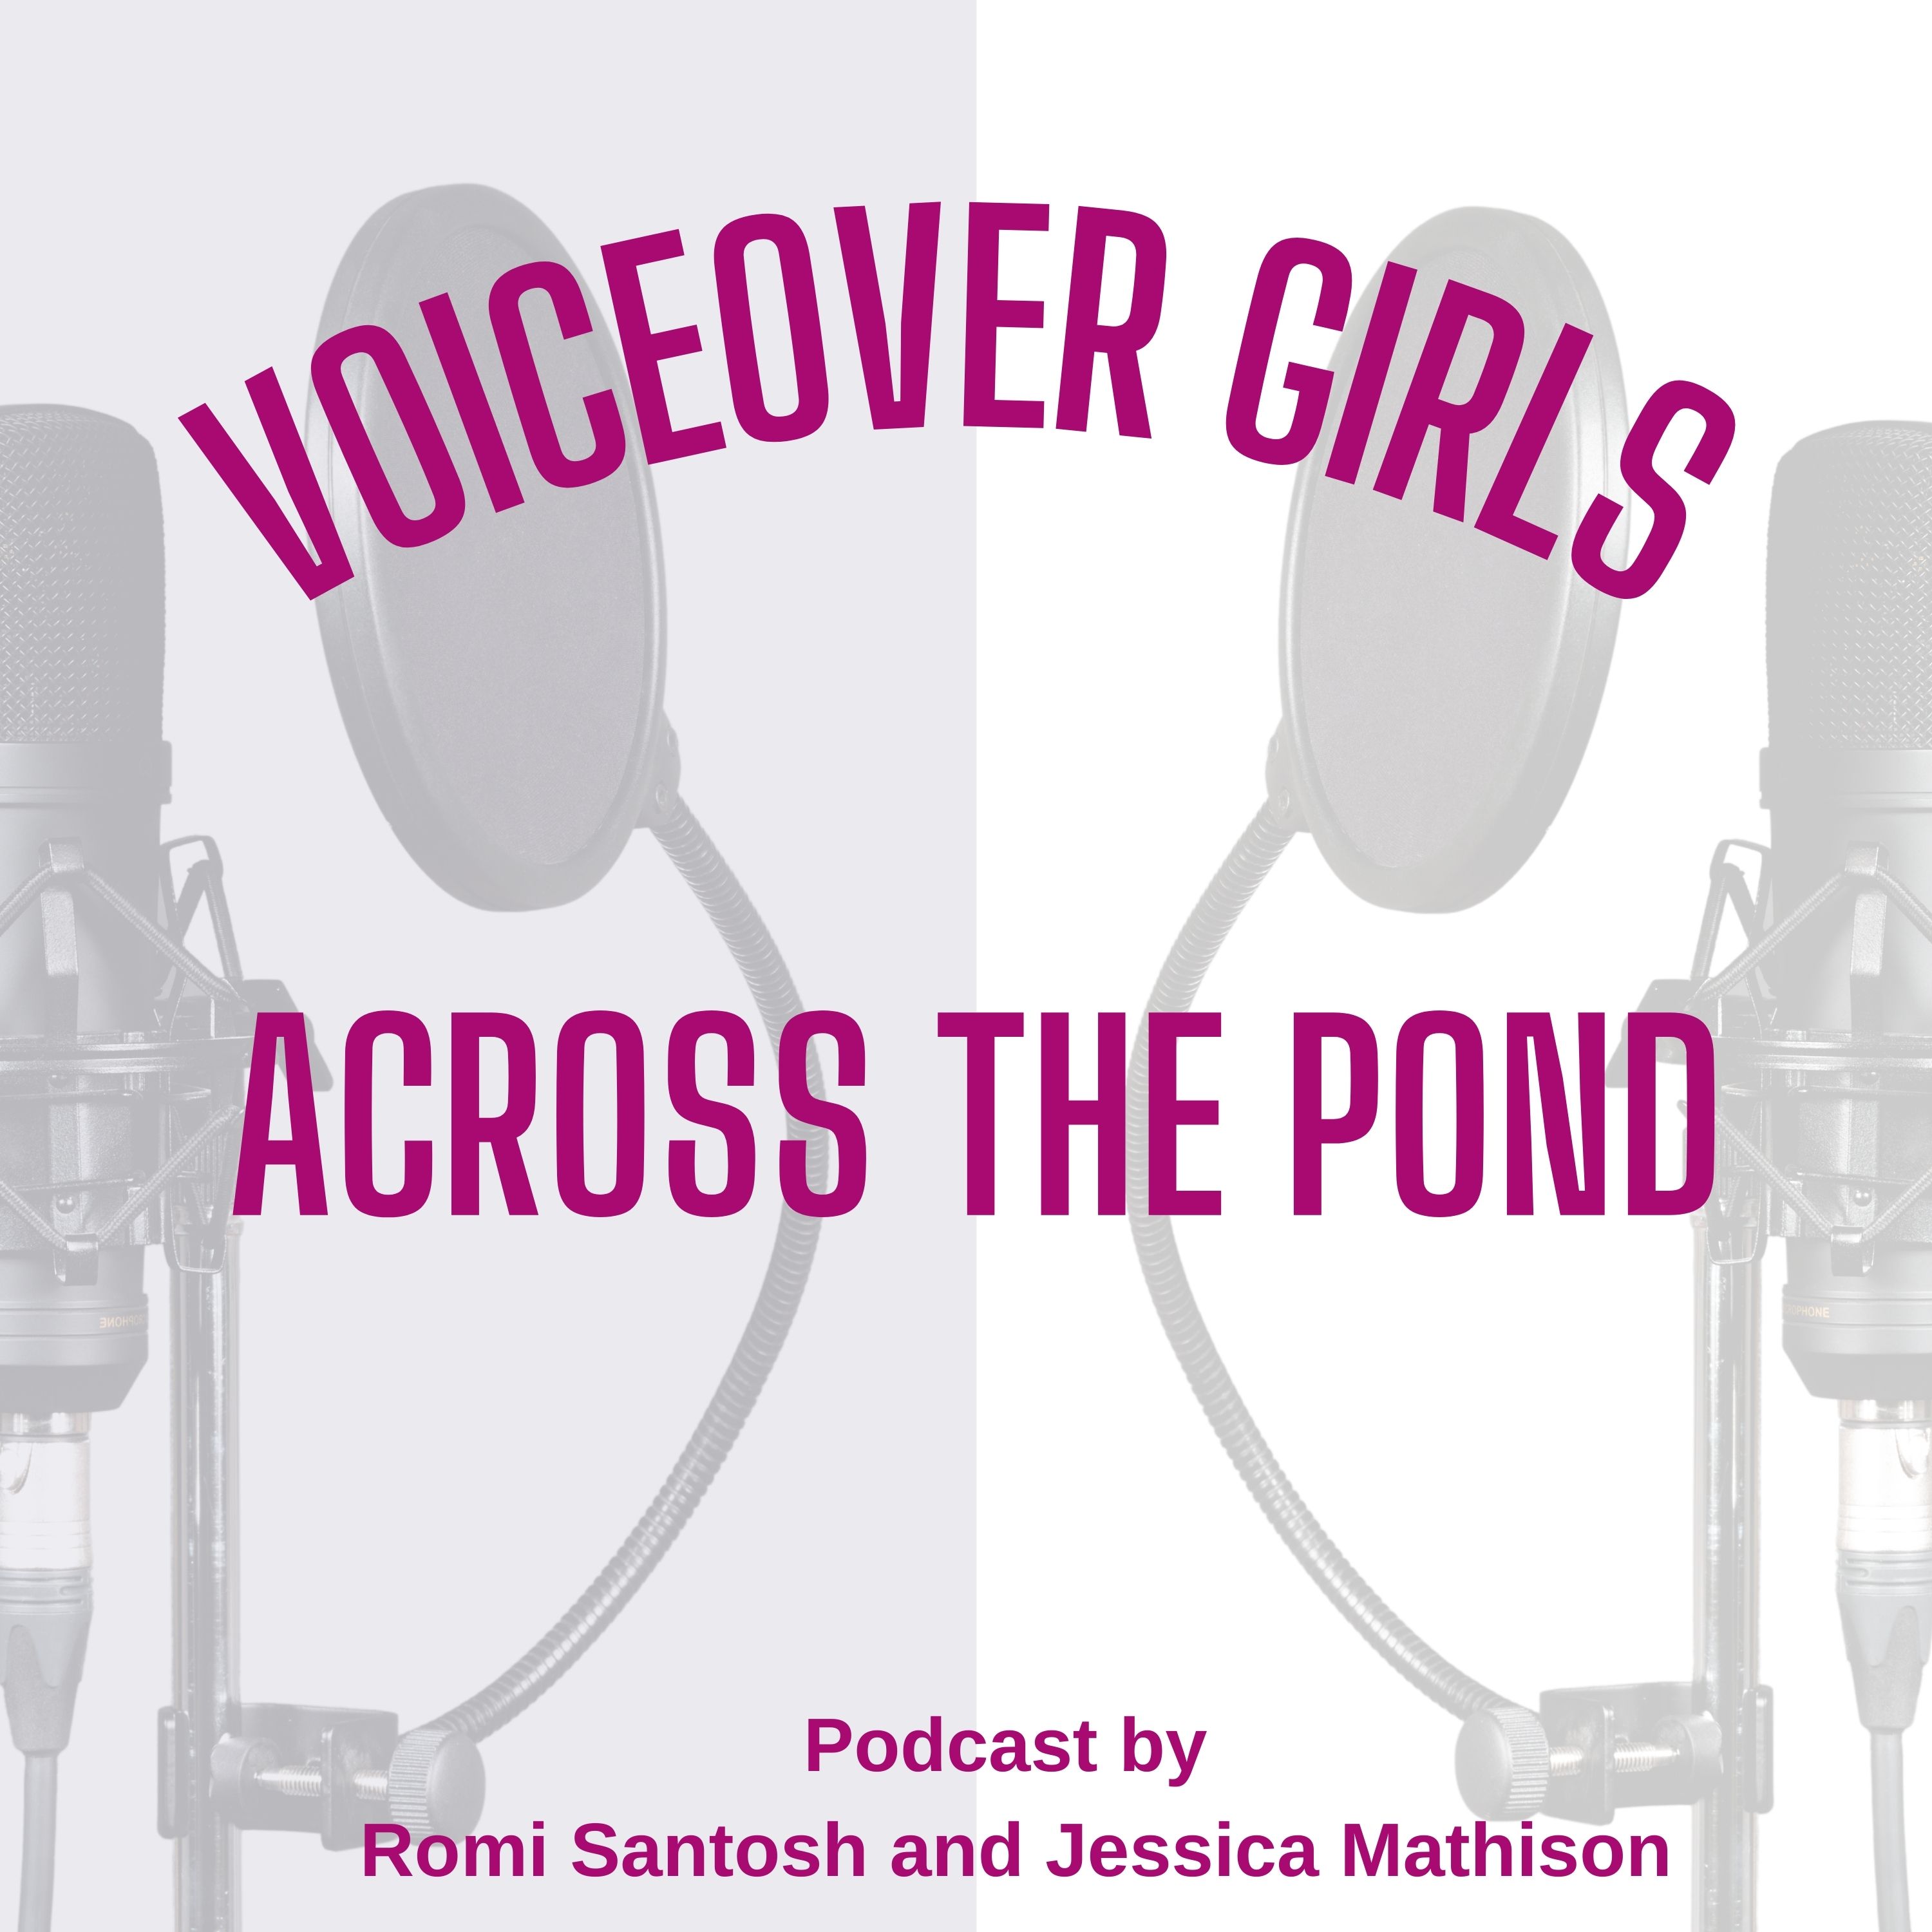 Artwork for podcast Voiceover Girls Across The Pond